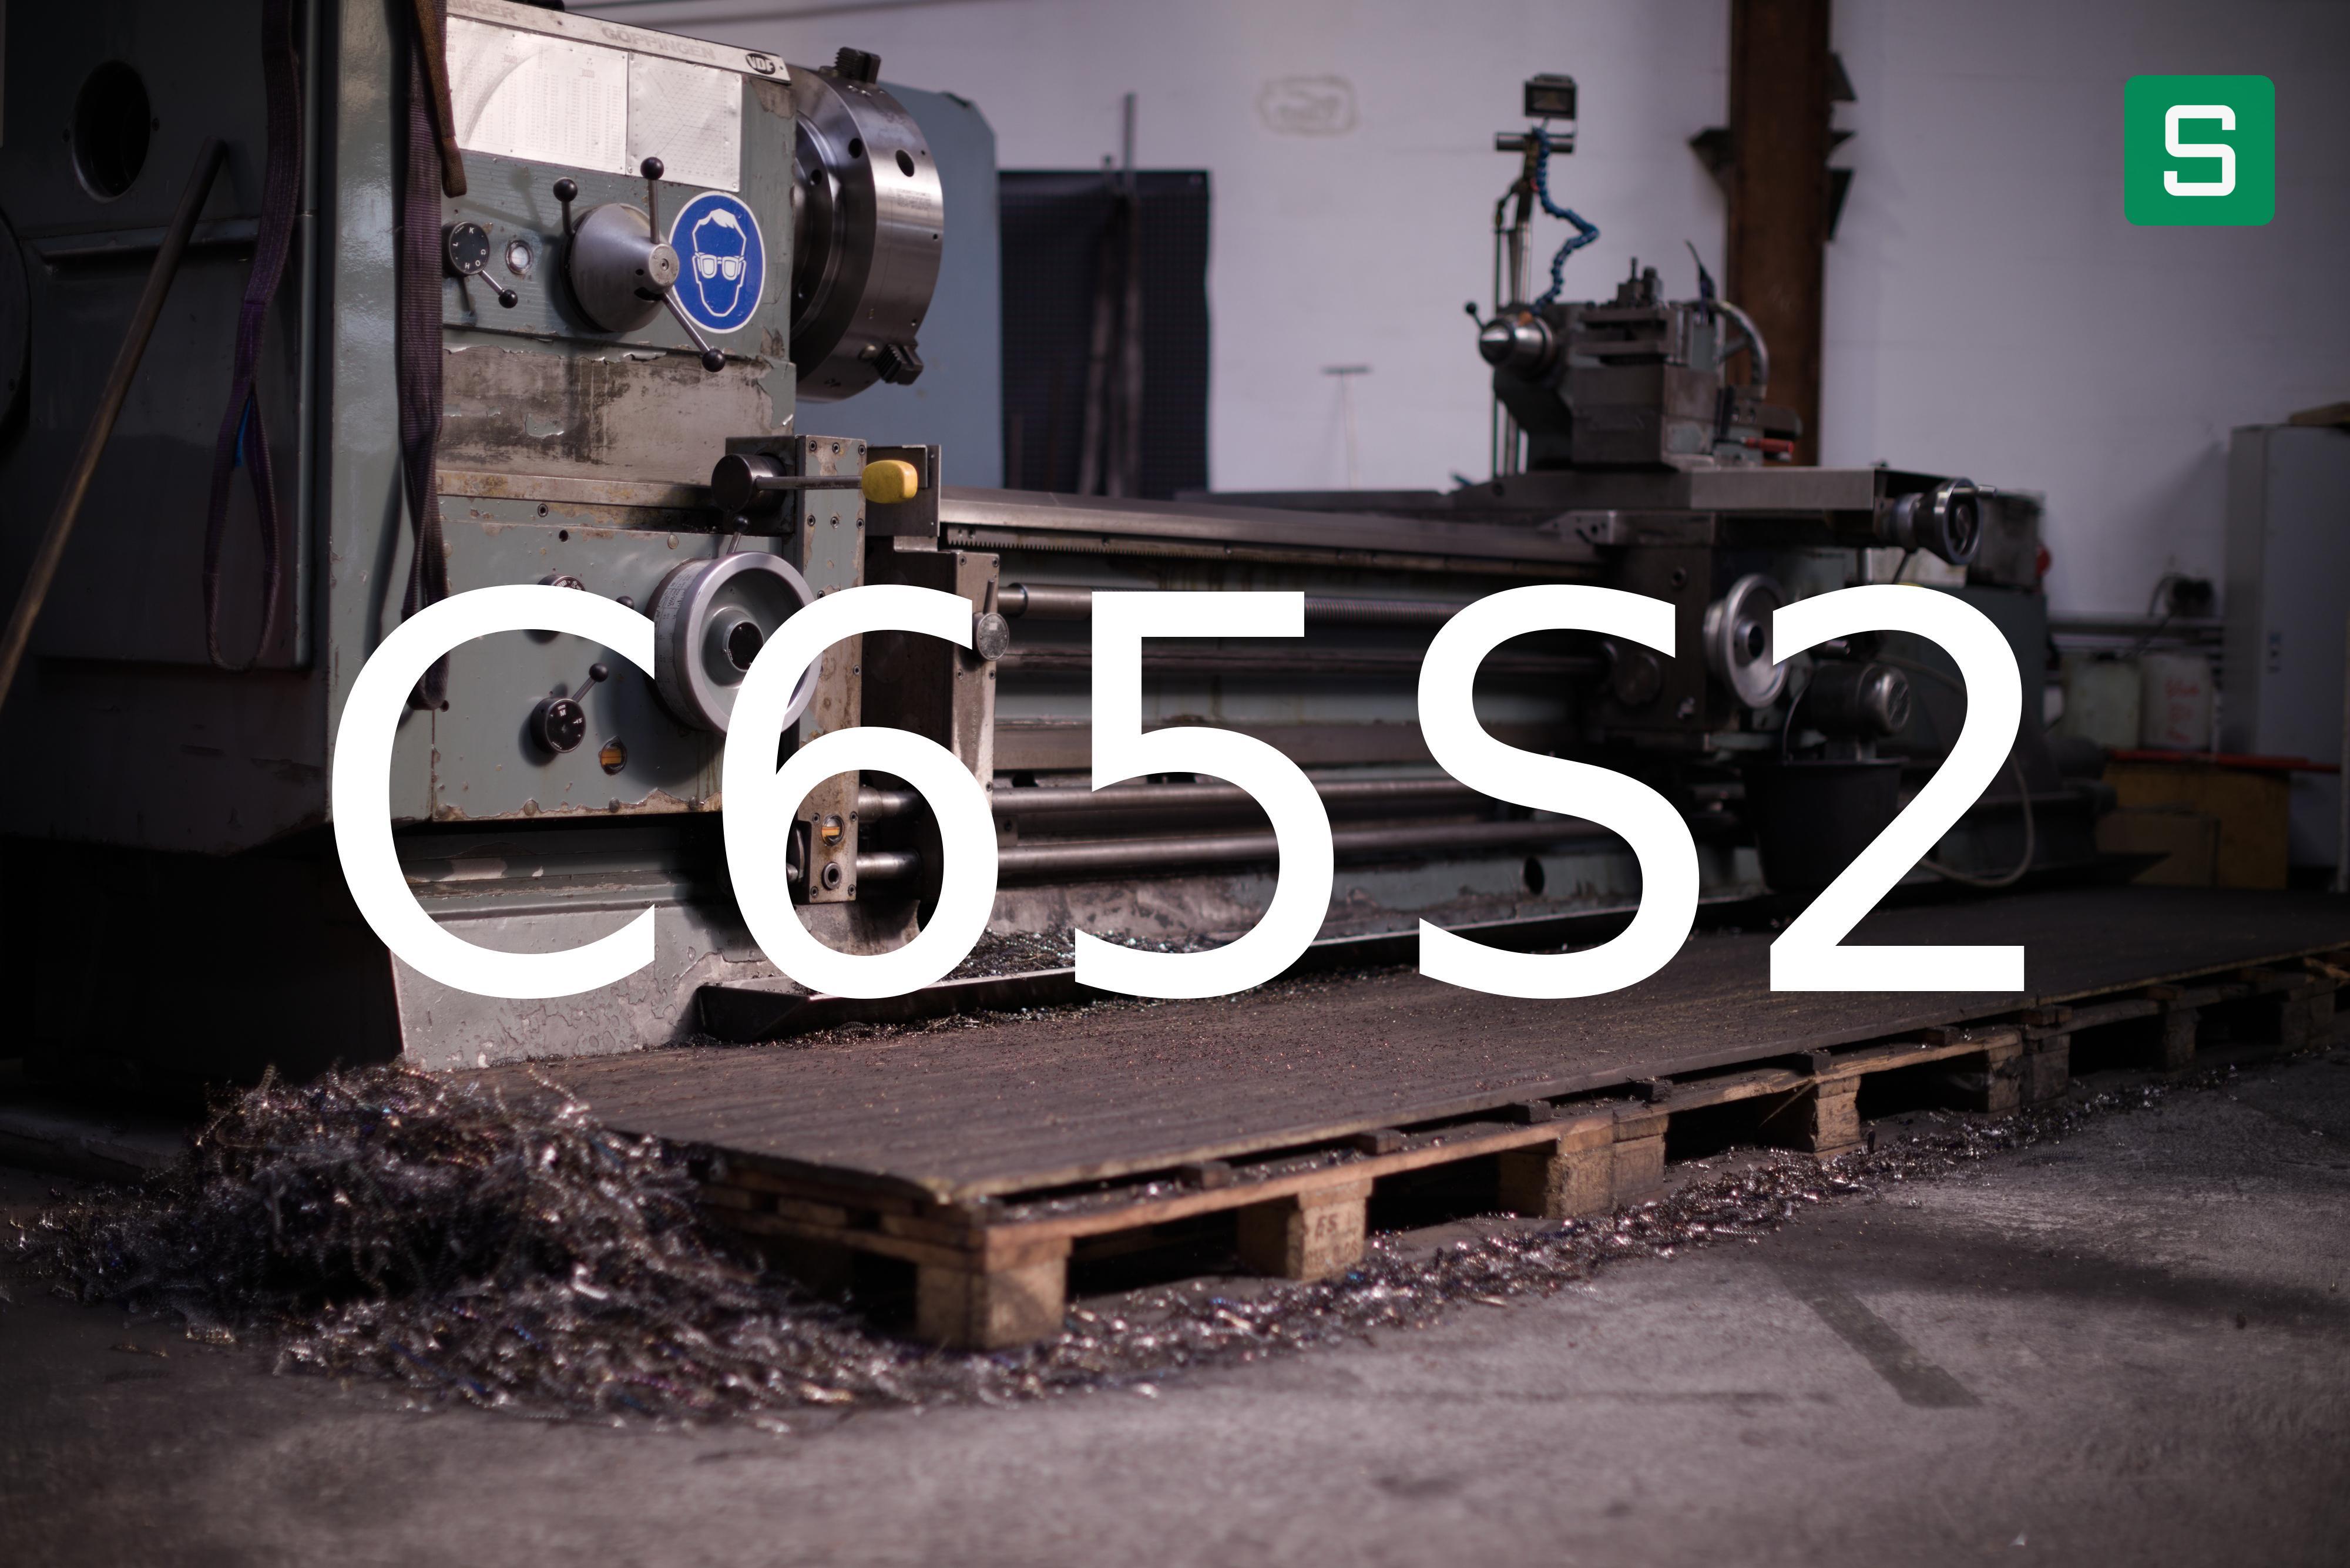 Steel Material: C65S2